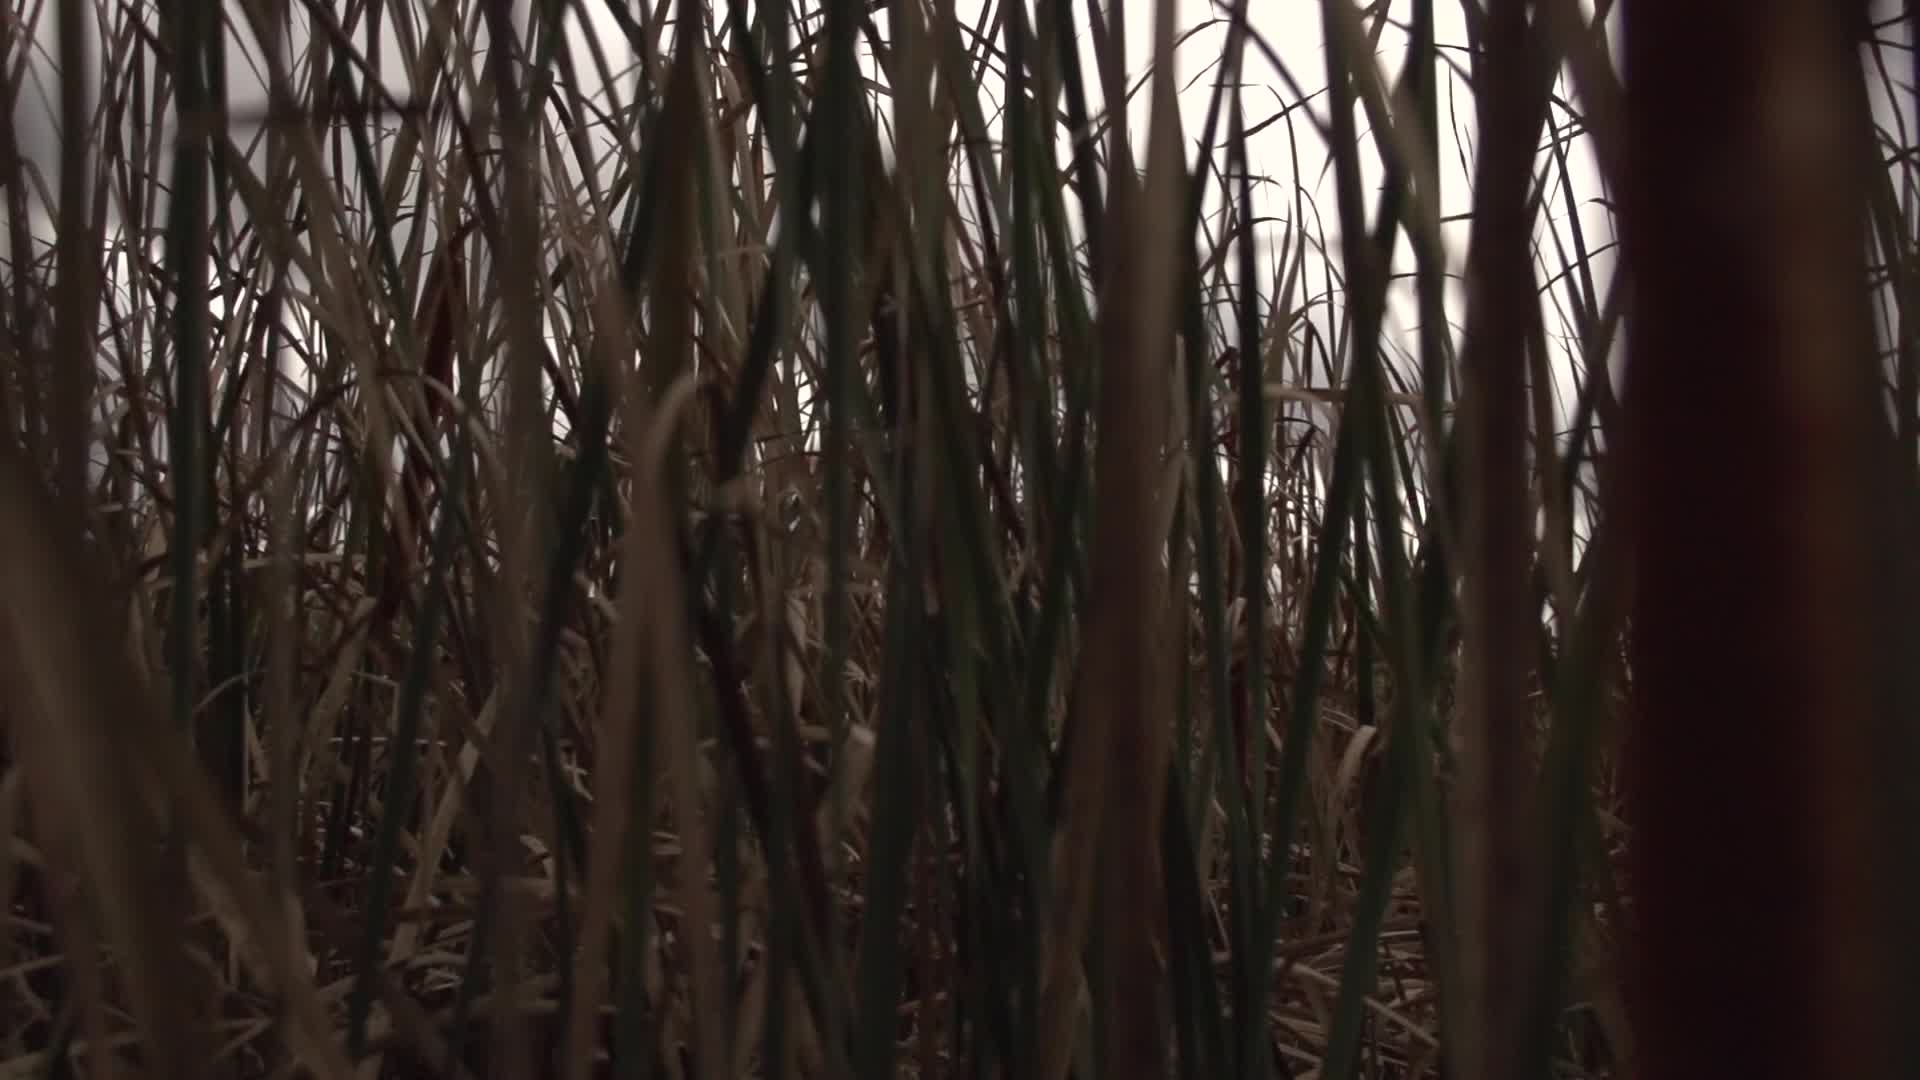 Through the Swamp